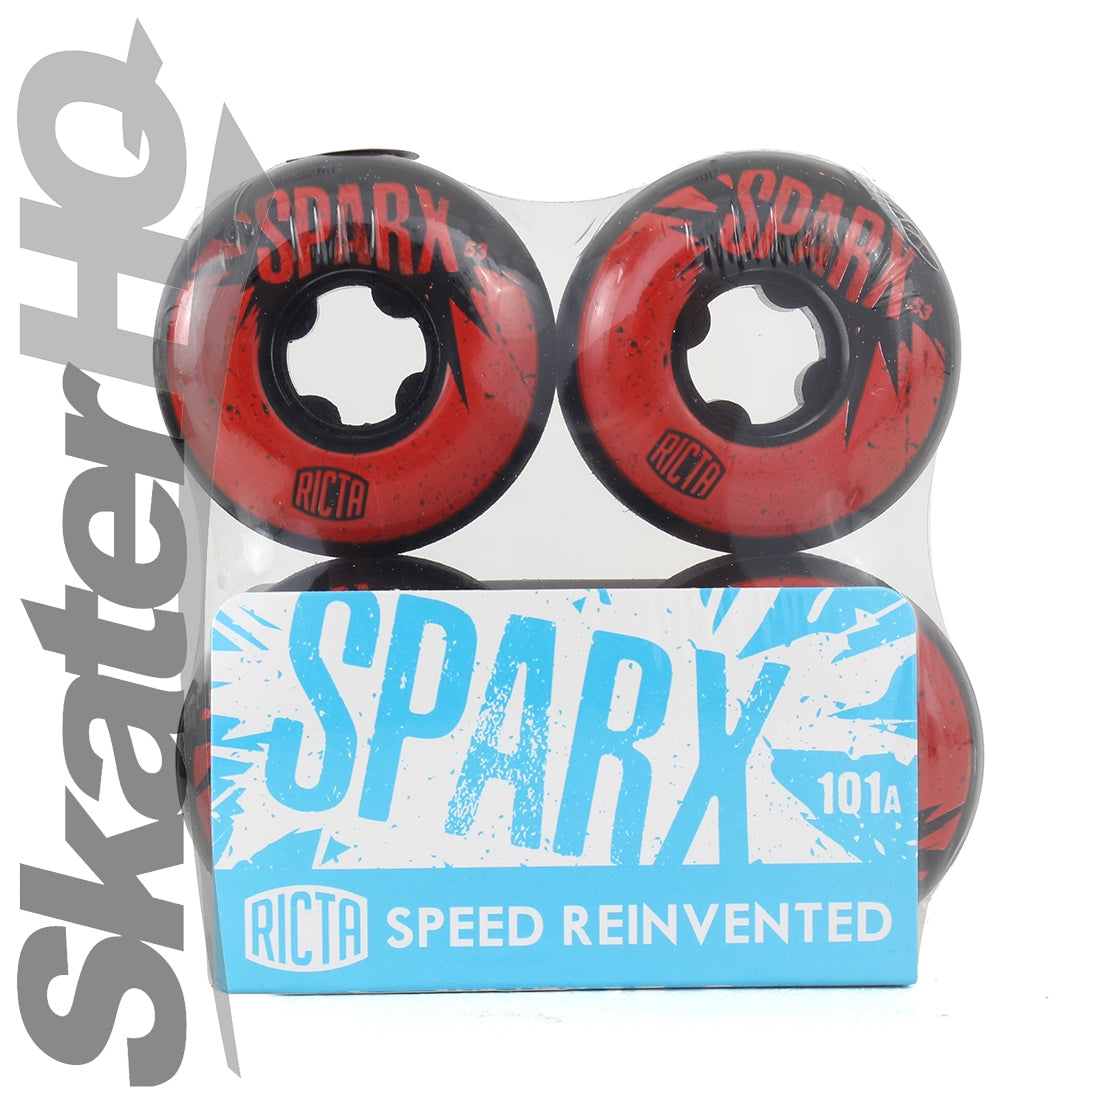 Ricta Sparx Black 53mm/101a - Red/Black Skateboard Wheels